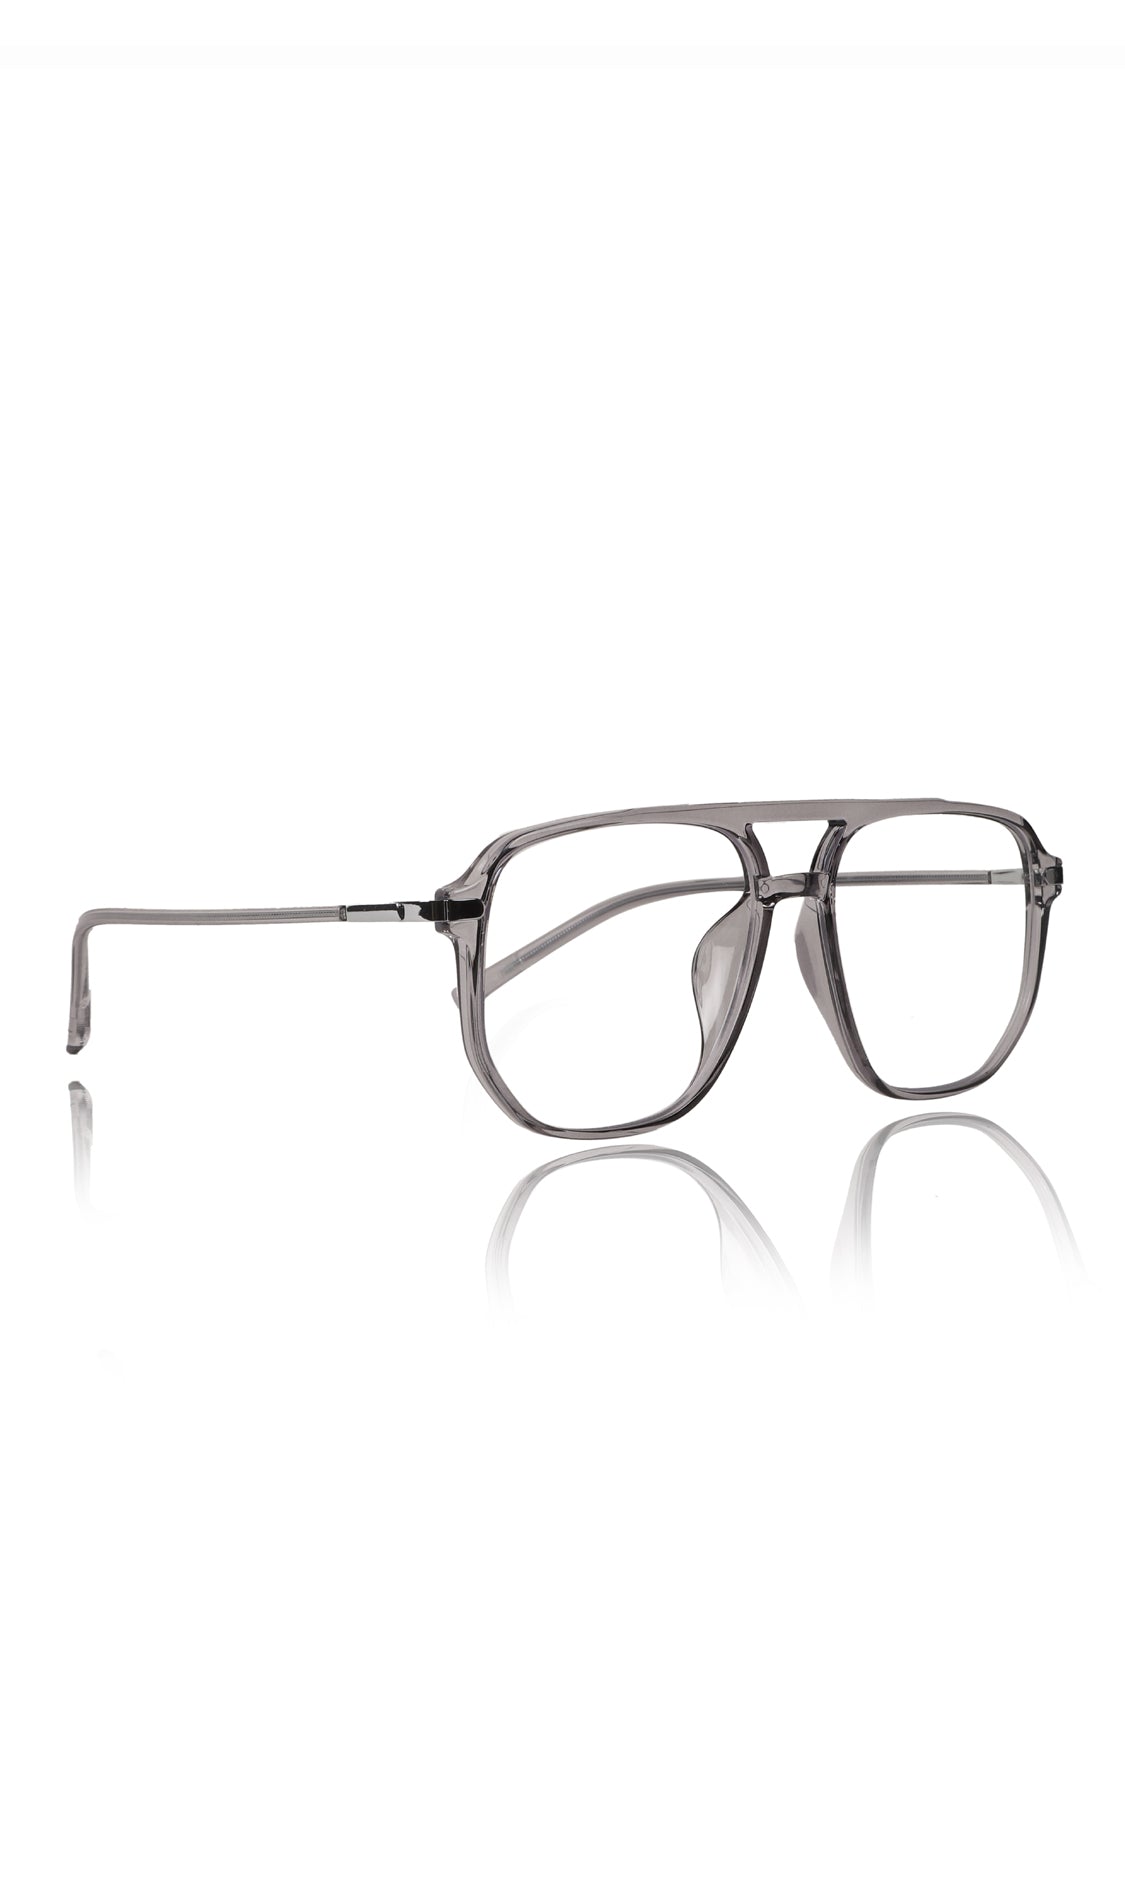 Jodykoes® Premium Oversized Eyeglass Frames: Stylish Anti-Glare and Blue Light Blocking Glasses for Enhanced Computer and Mobile Phone Protection, Unisex Design (Grey)